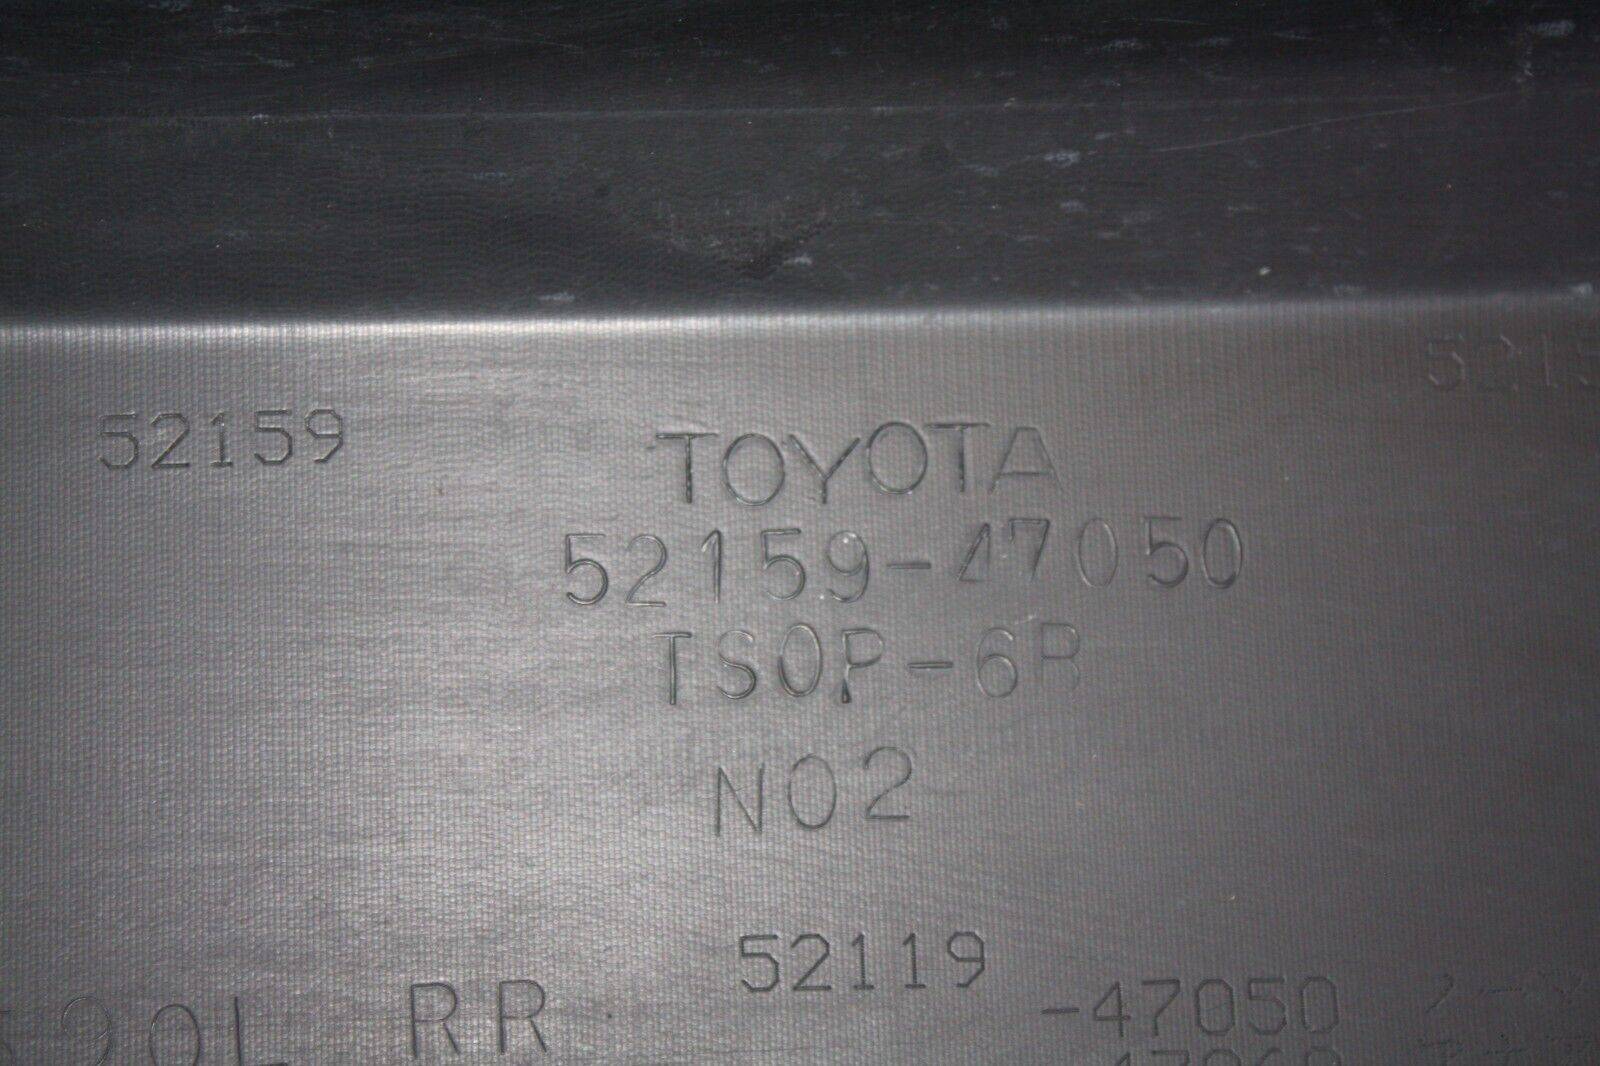 Toyota-Prius-Rear-Bumper-2009-TO-2012-52159-47050-Genuine-176110207315-11